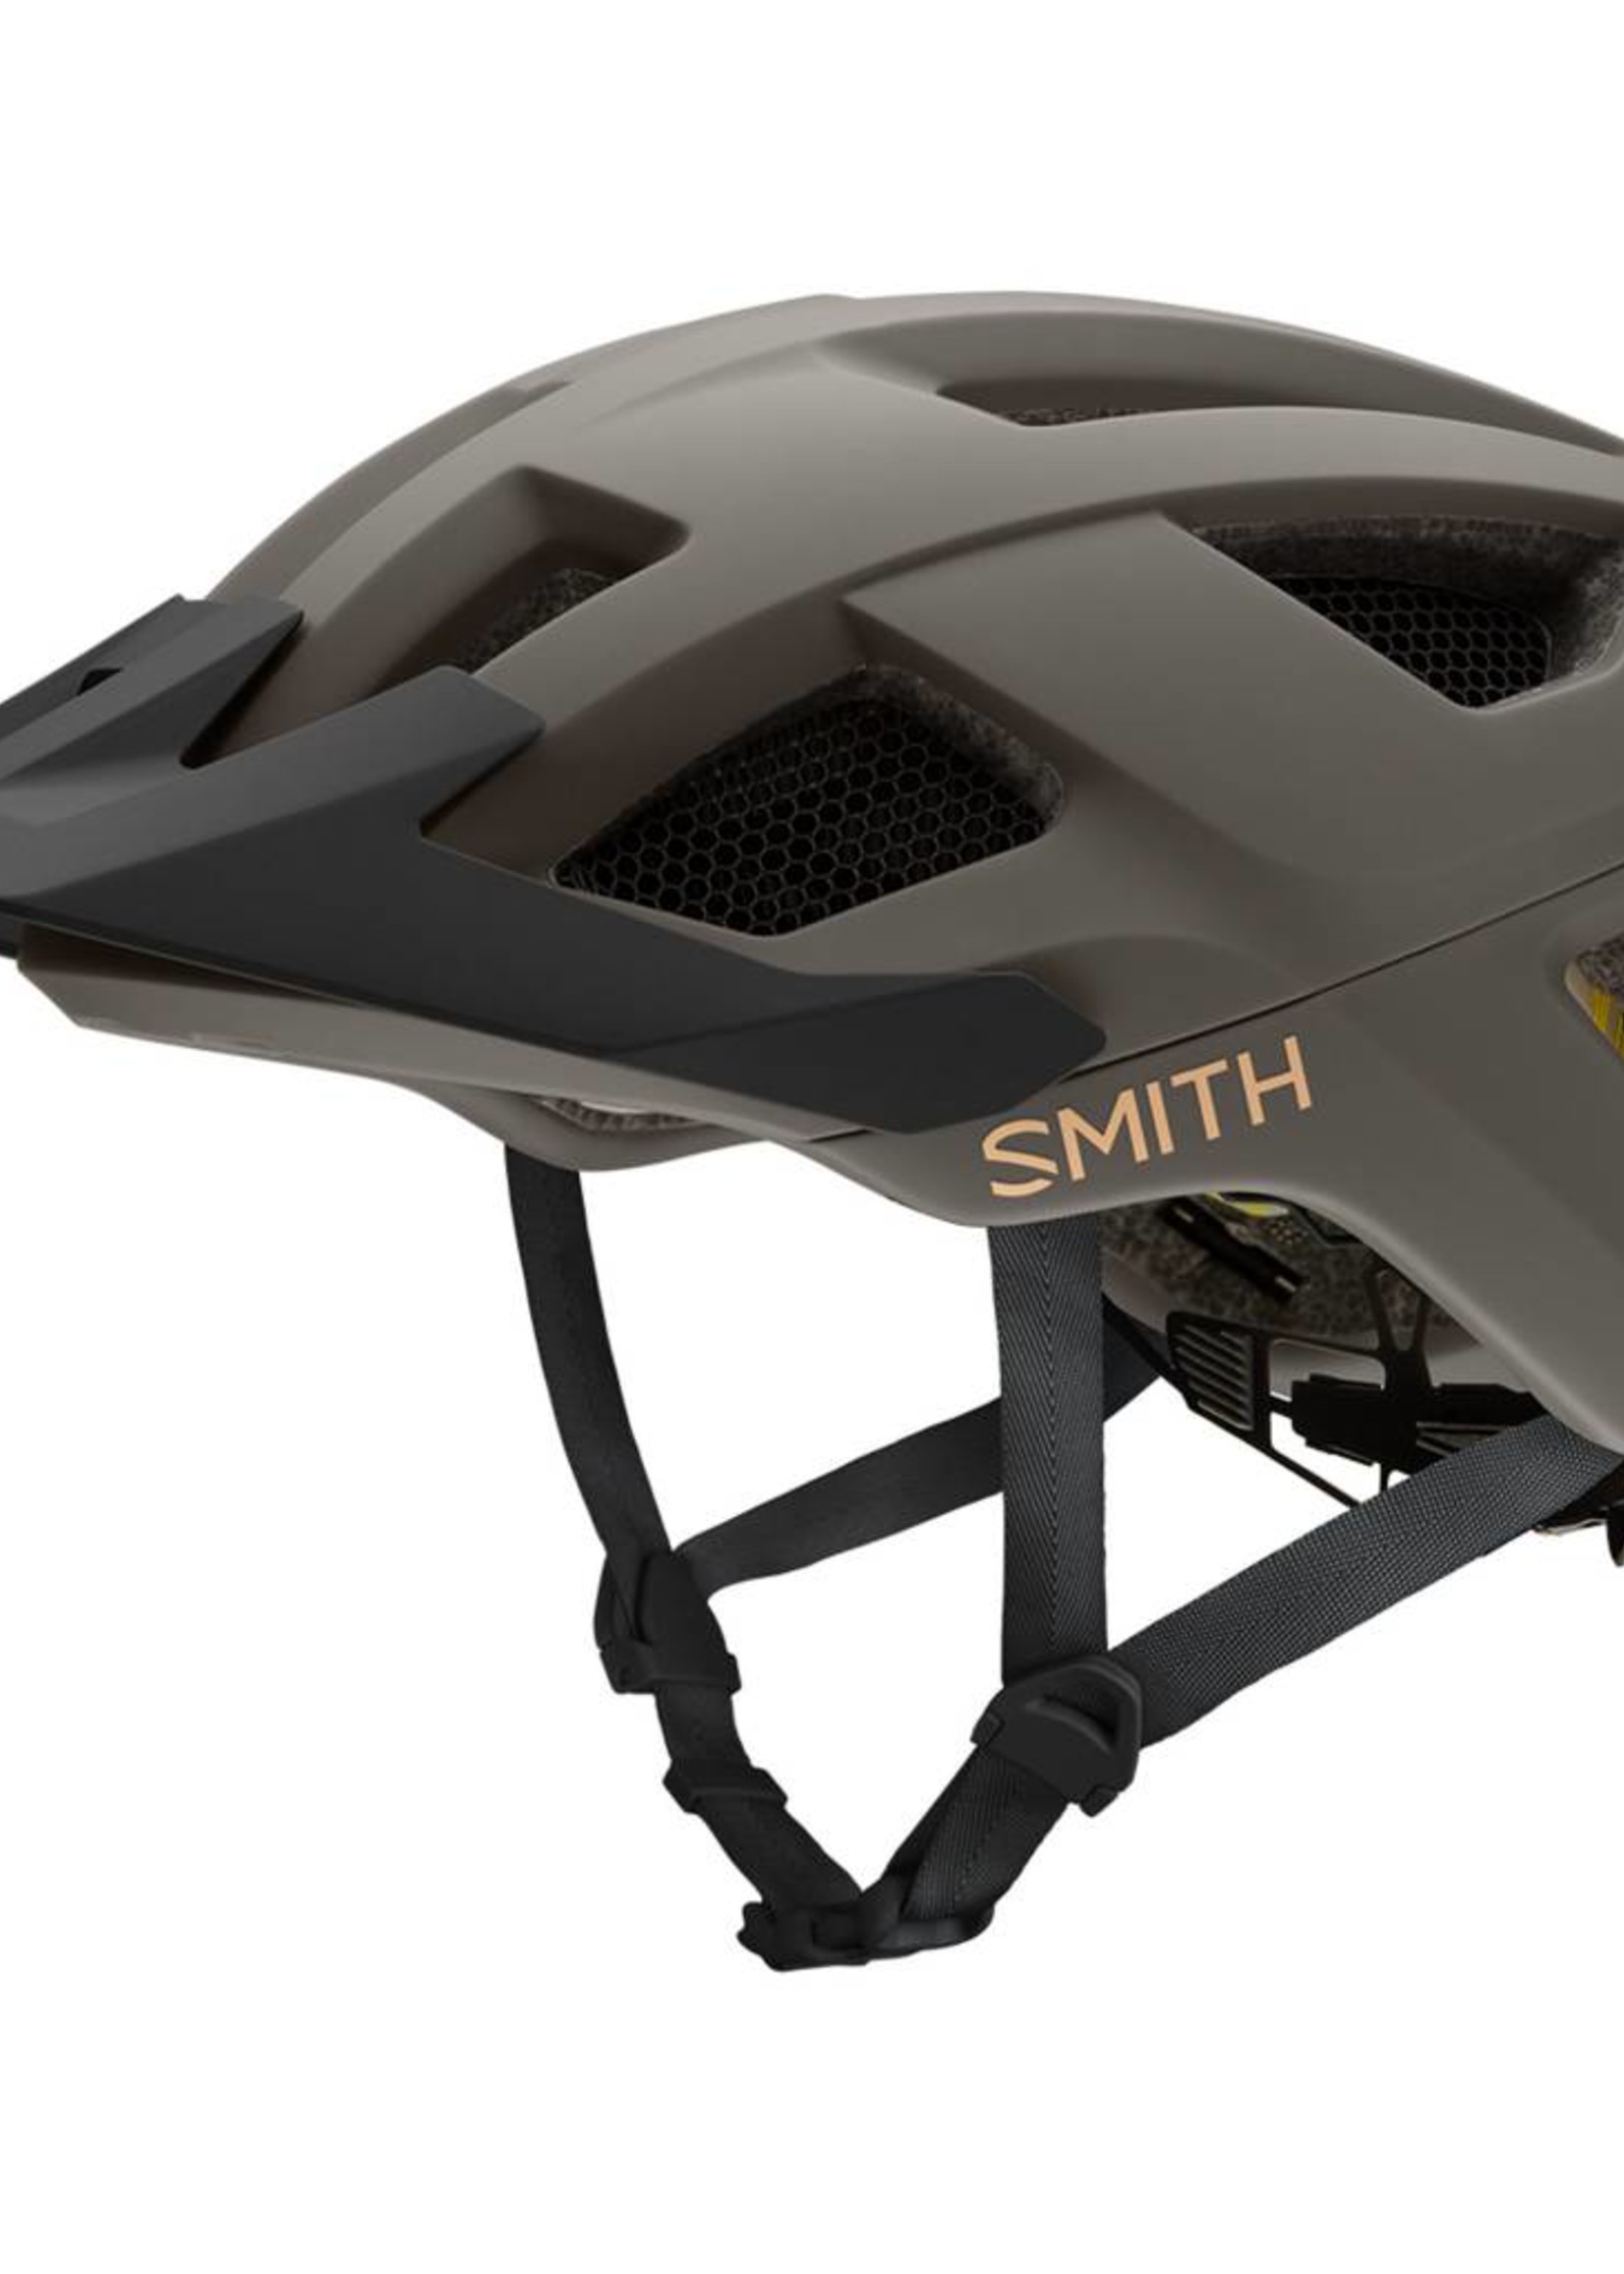 SMITH Smith Session MIPS Helmet